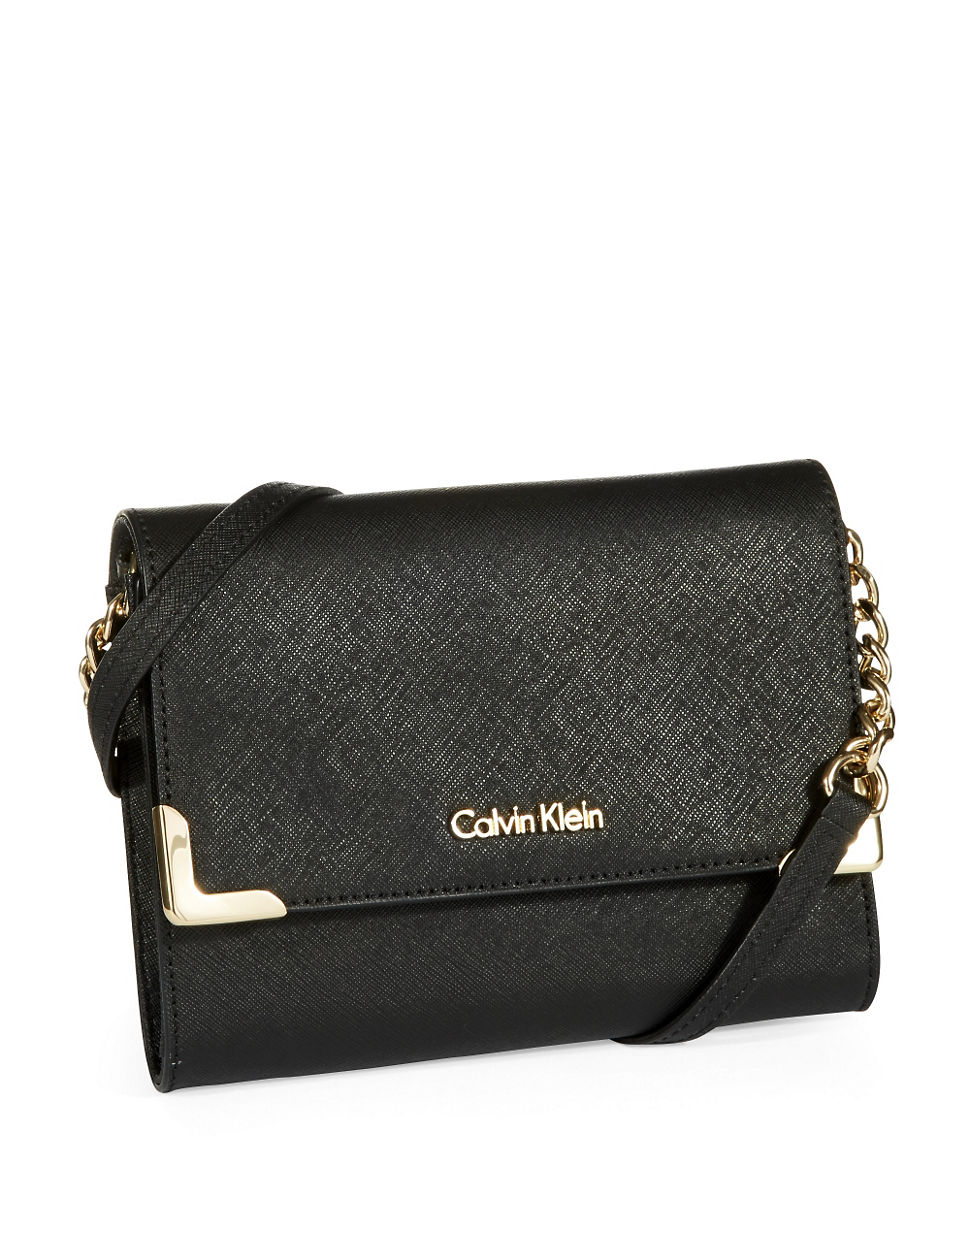 Calvin Klein Petite Crossbody Bag in Black